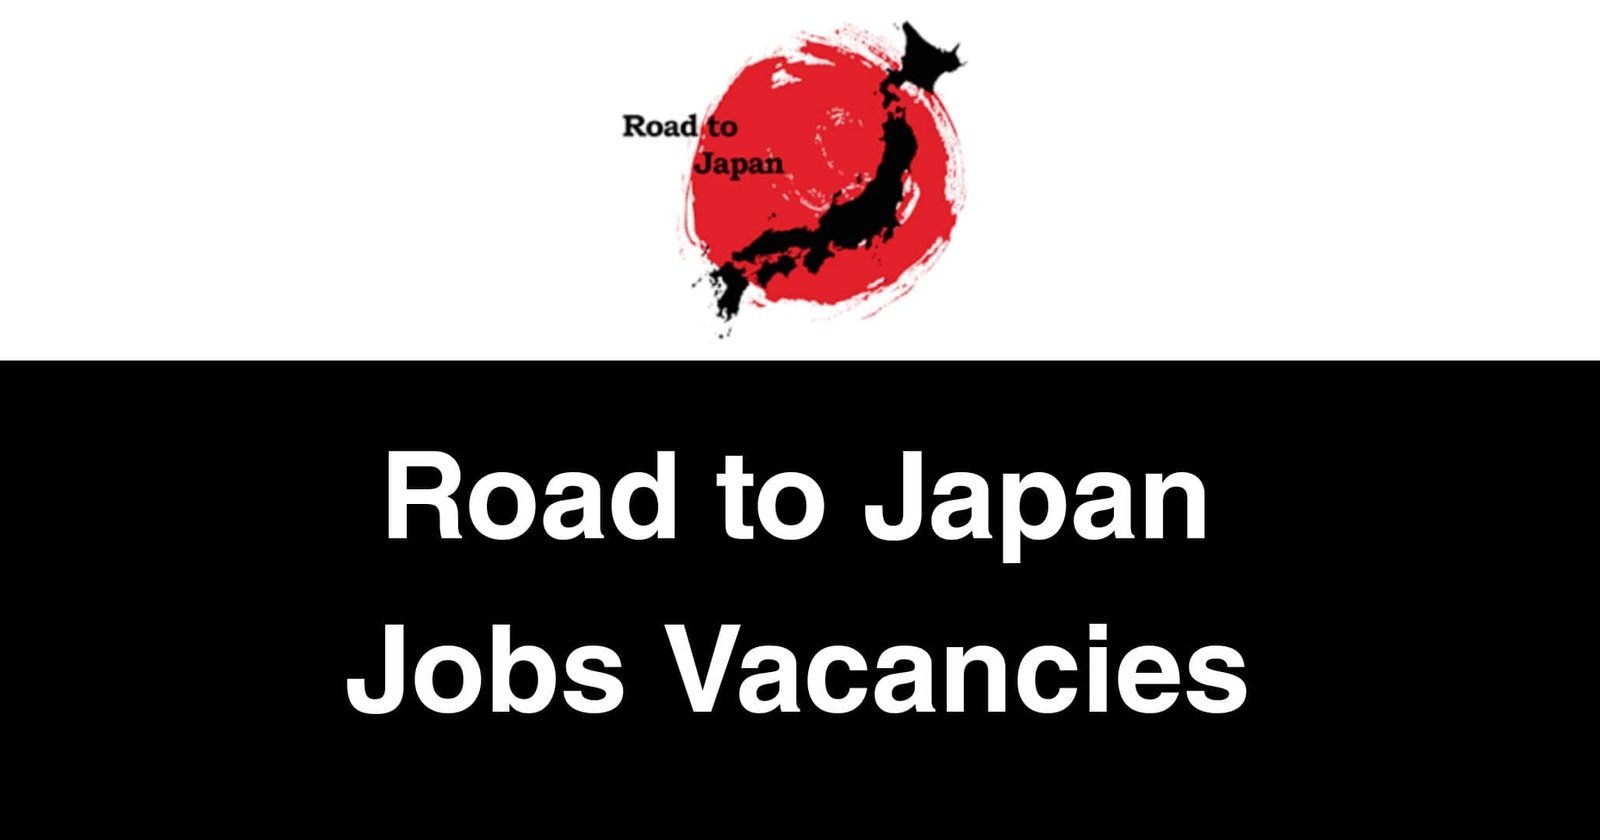 Road to Japan Jobs Vacancies